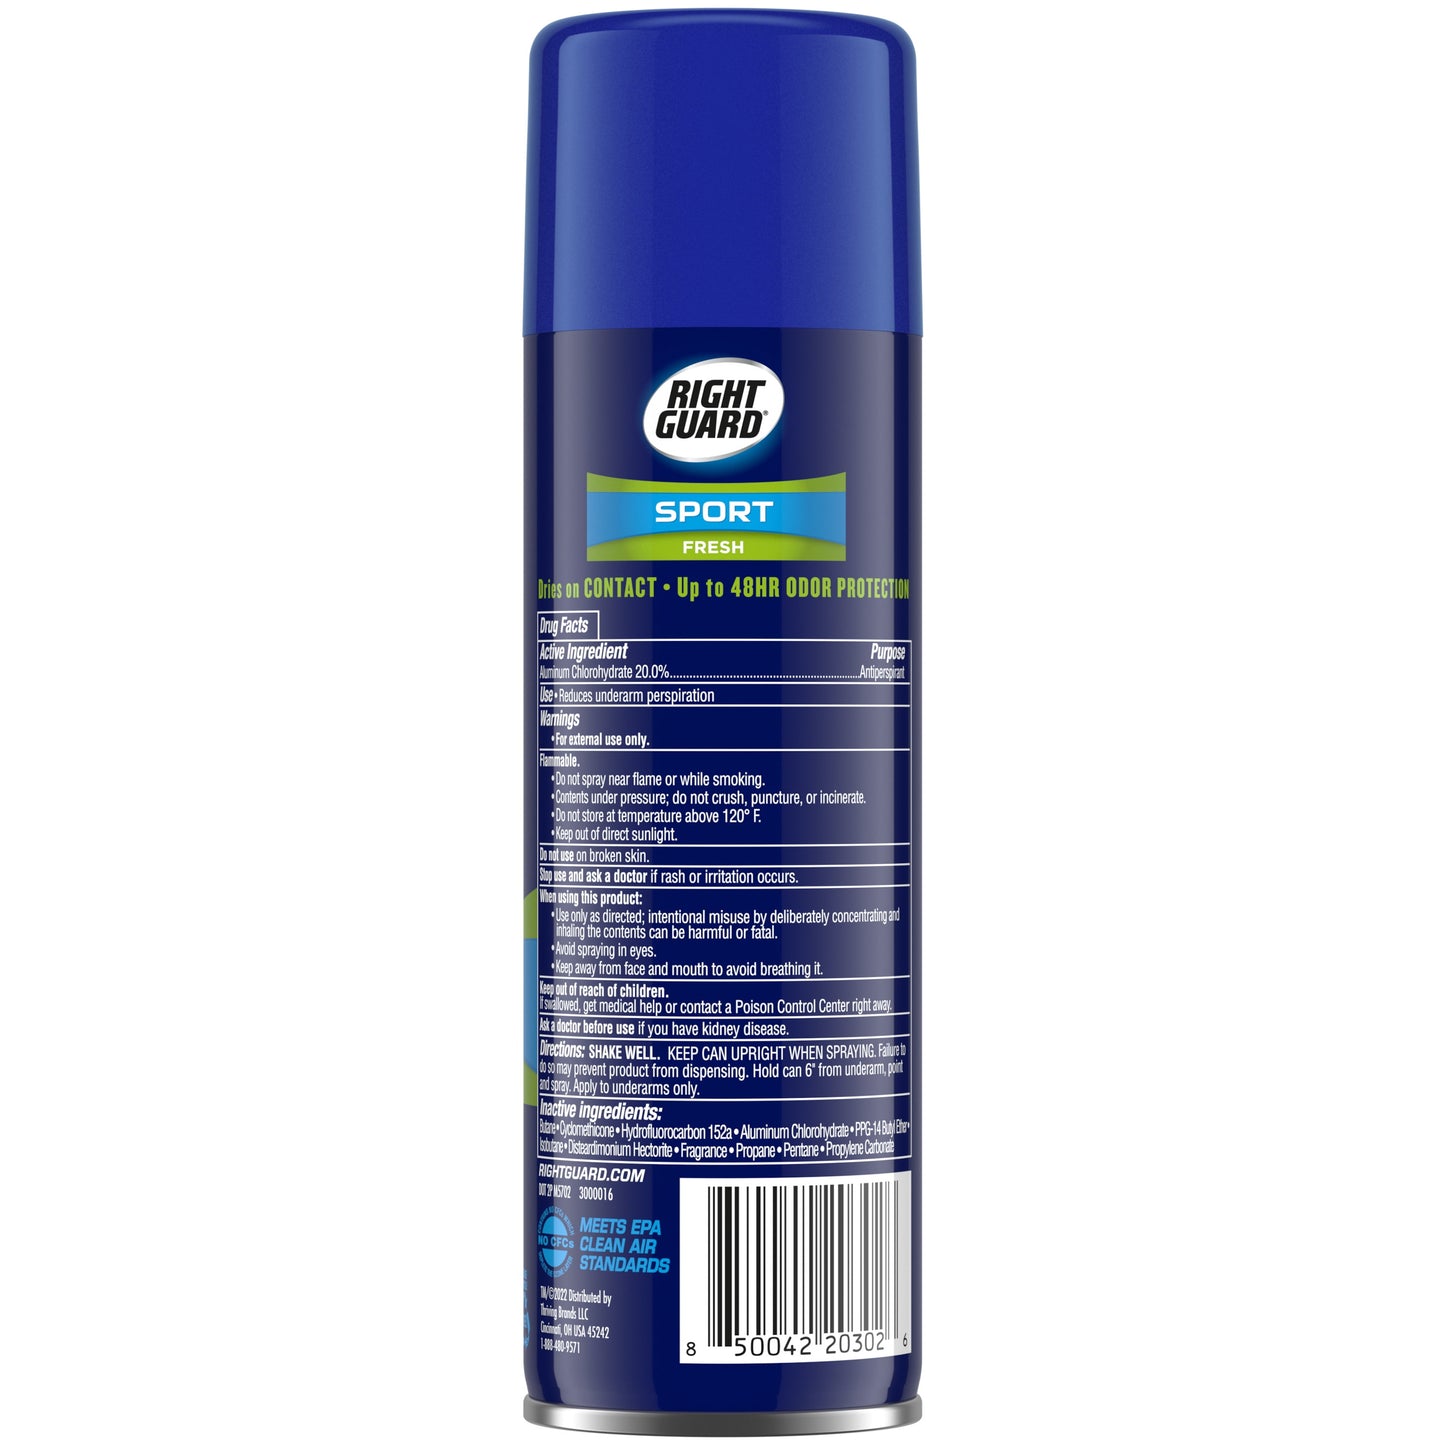 Right Guard Sport Antiperspirant Deodorant Aerosol, Fresh, 6 oz